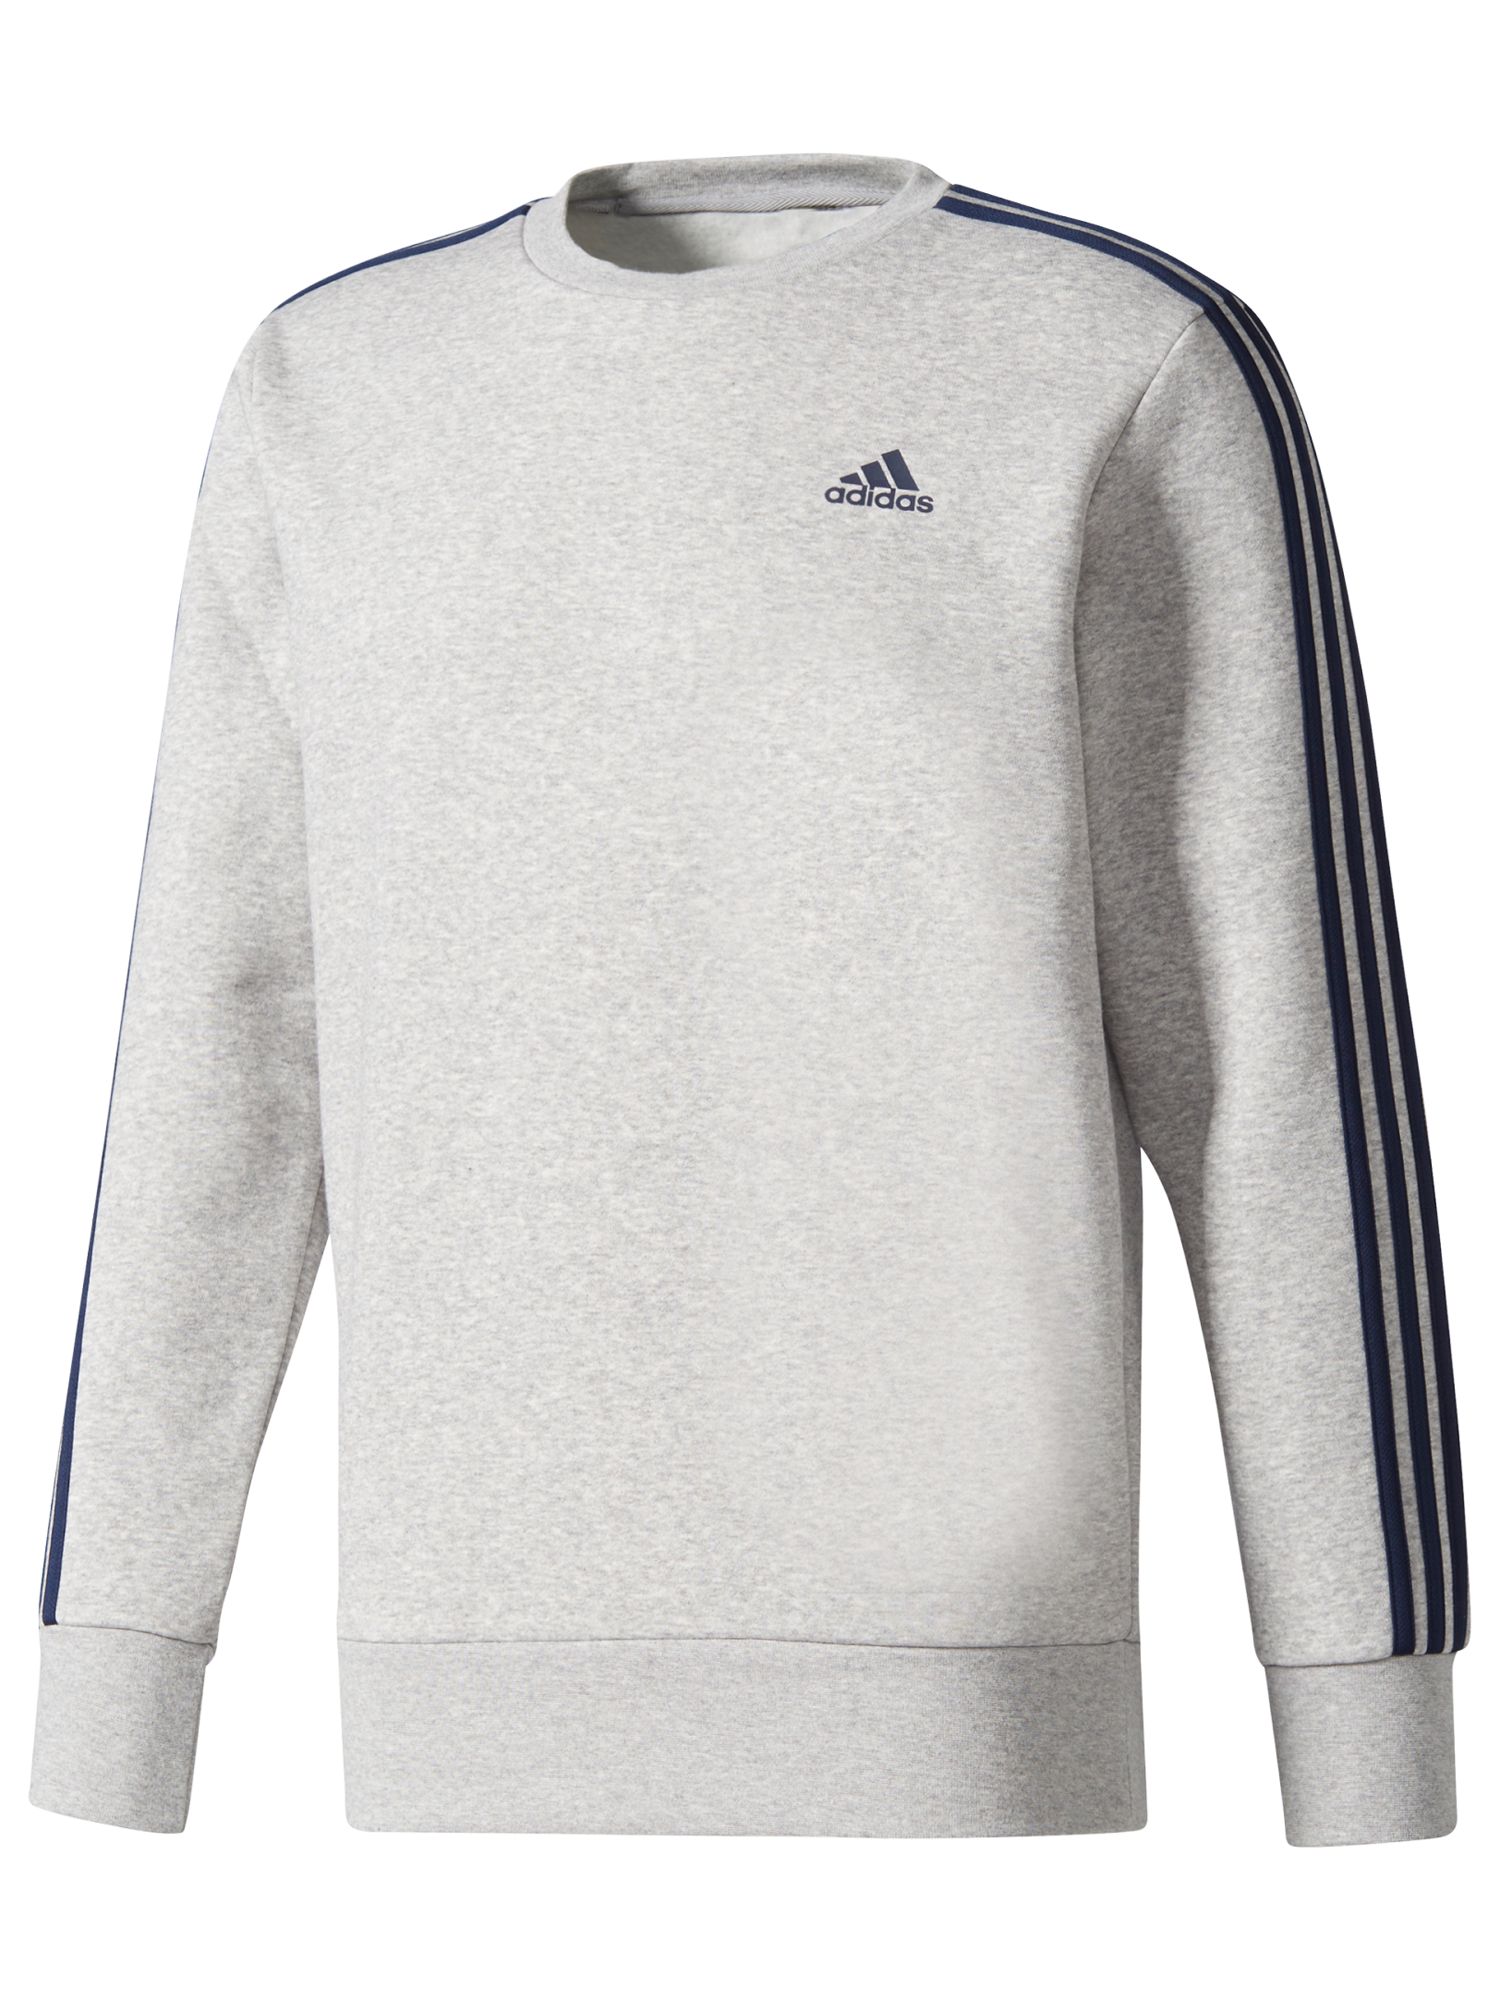  Adidas  Essentials 3 Stripes Crew Sweatshirt  Grey at John 